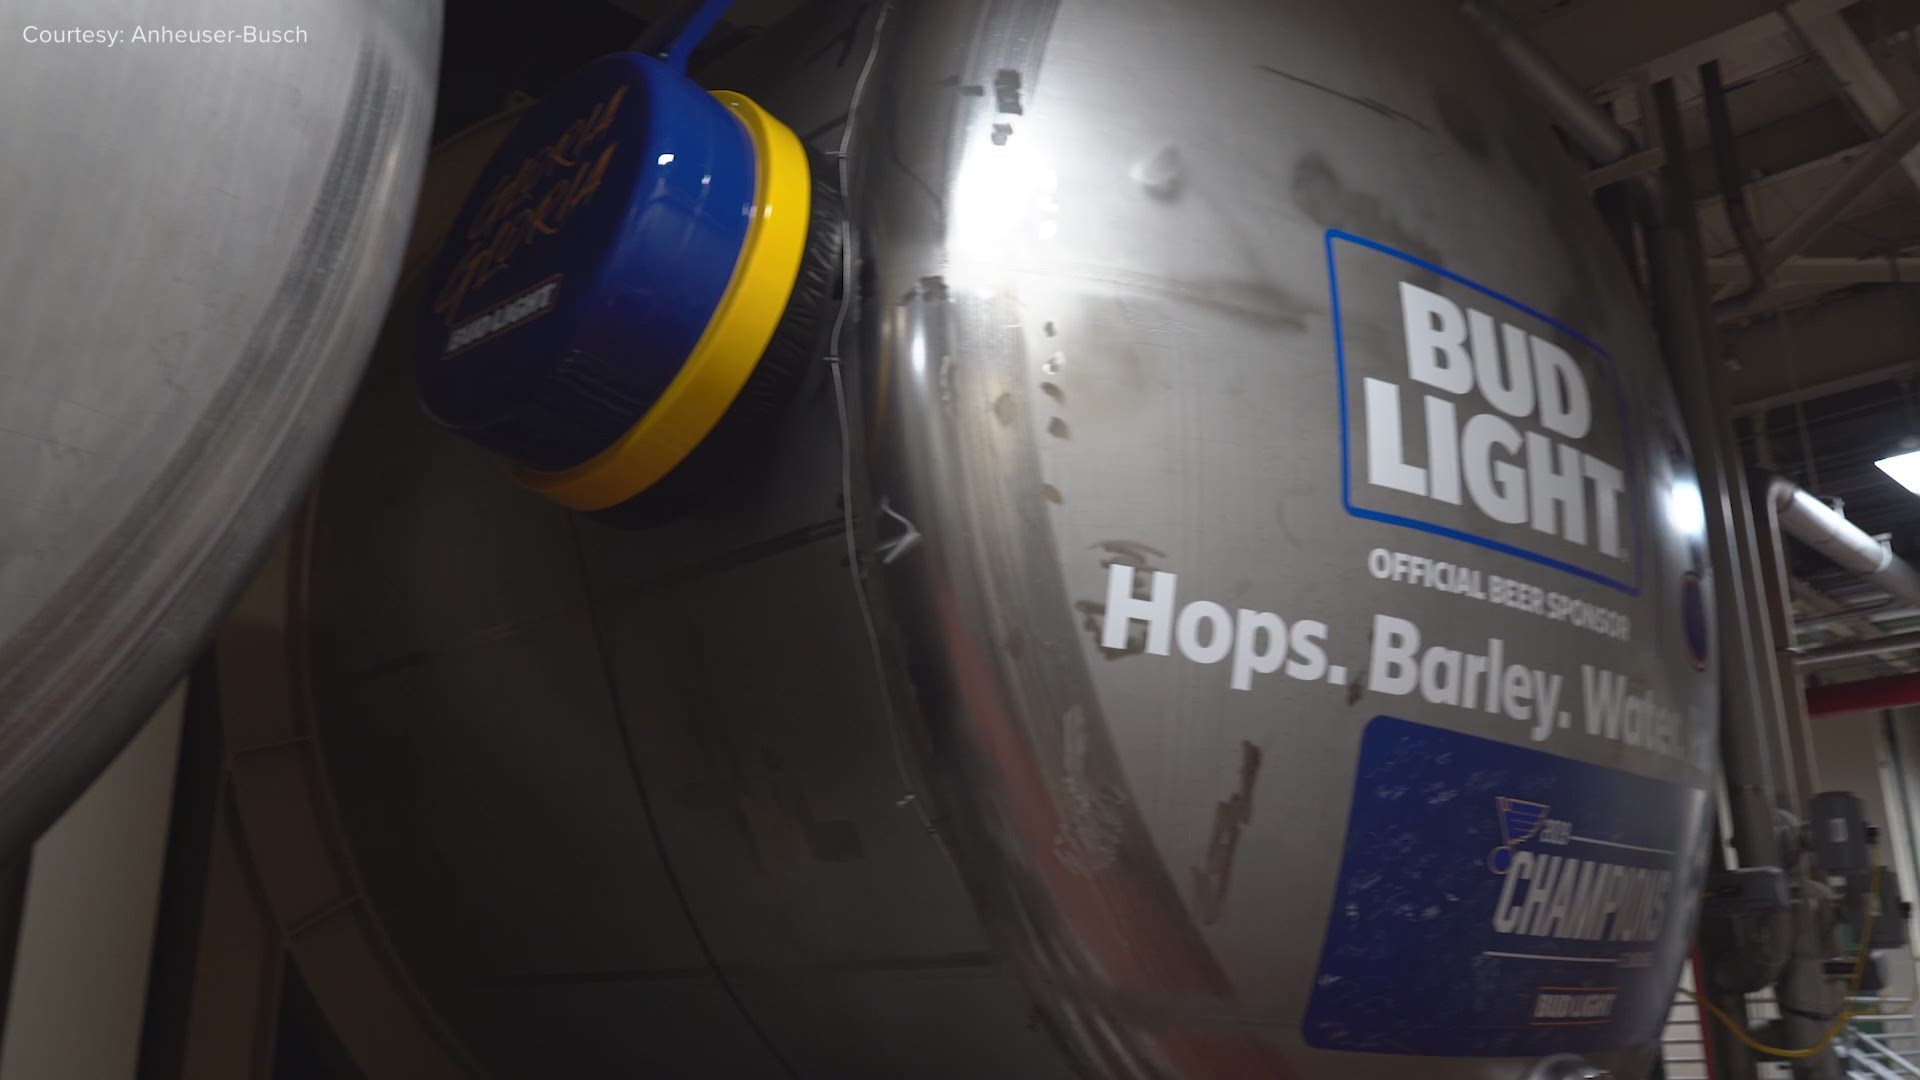 Bud Light St. Louis Blues 'Gloria Brew' goes on sale Monday